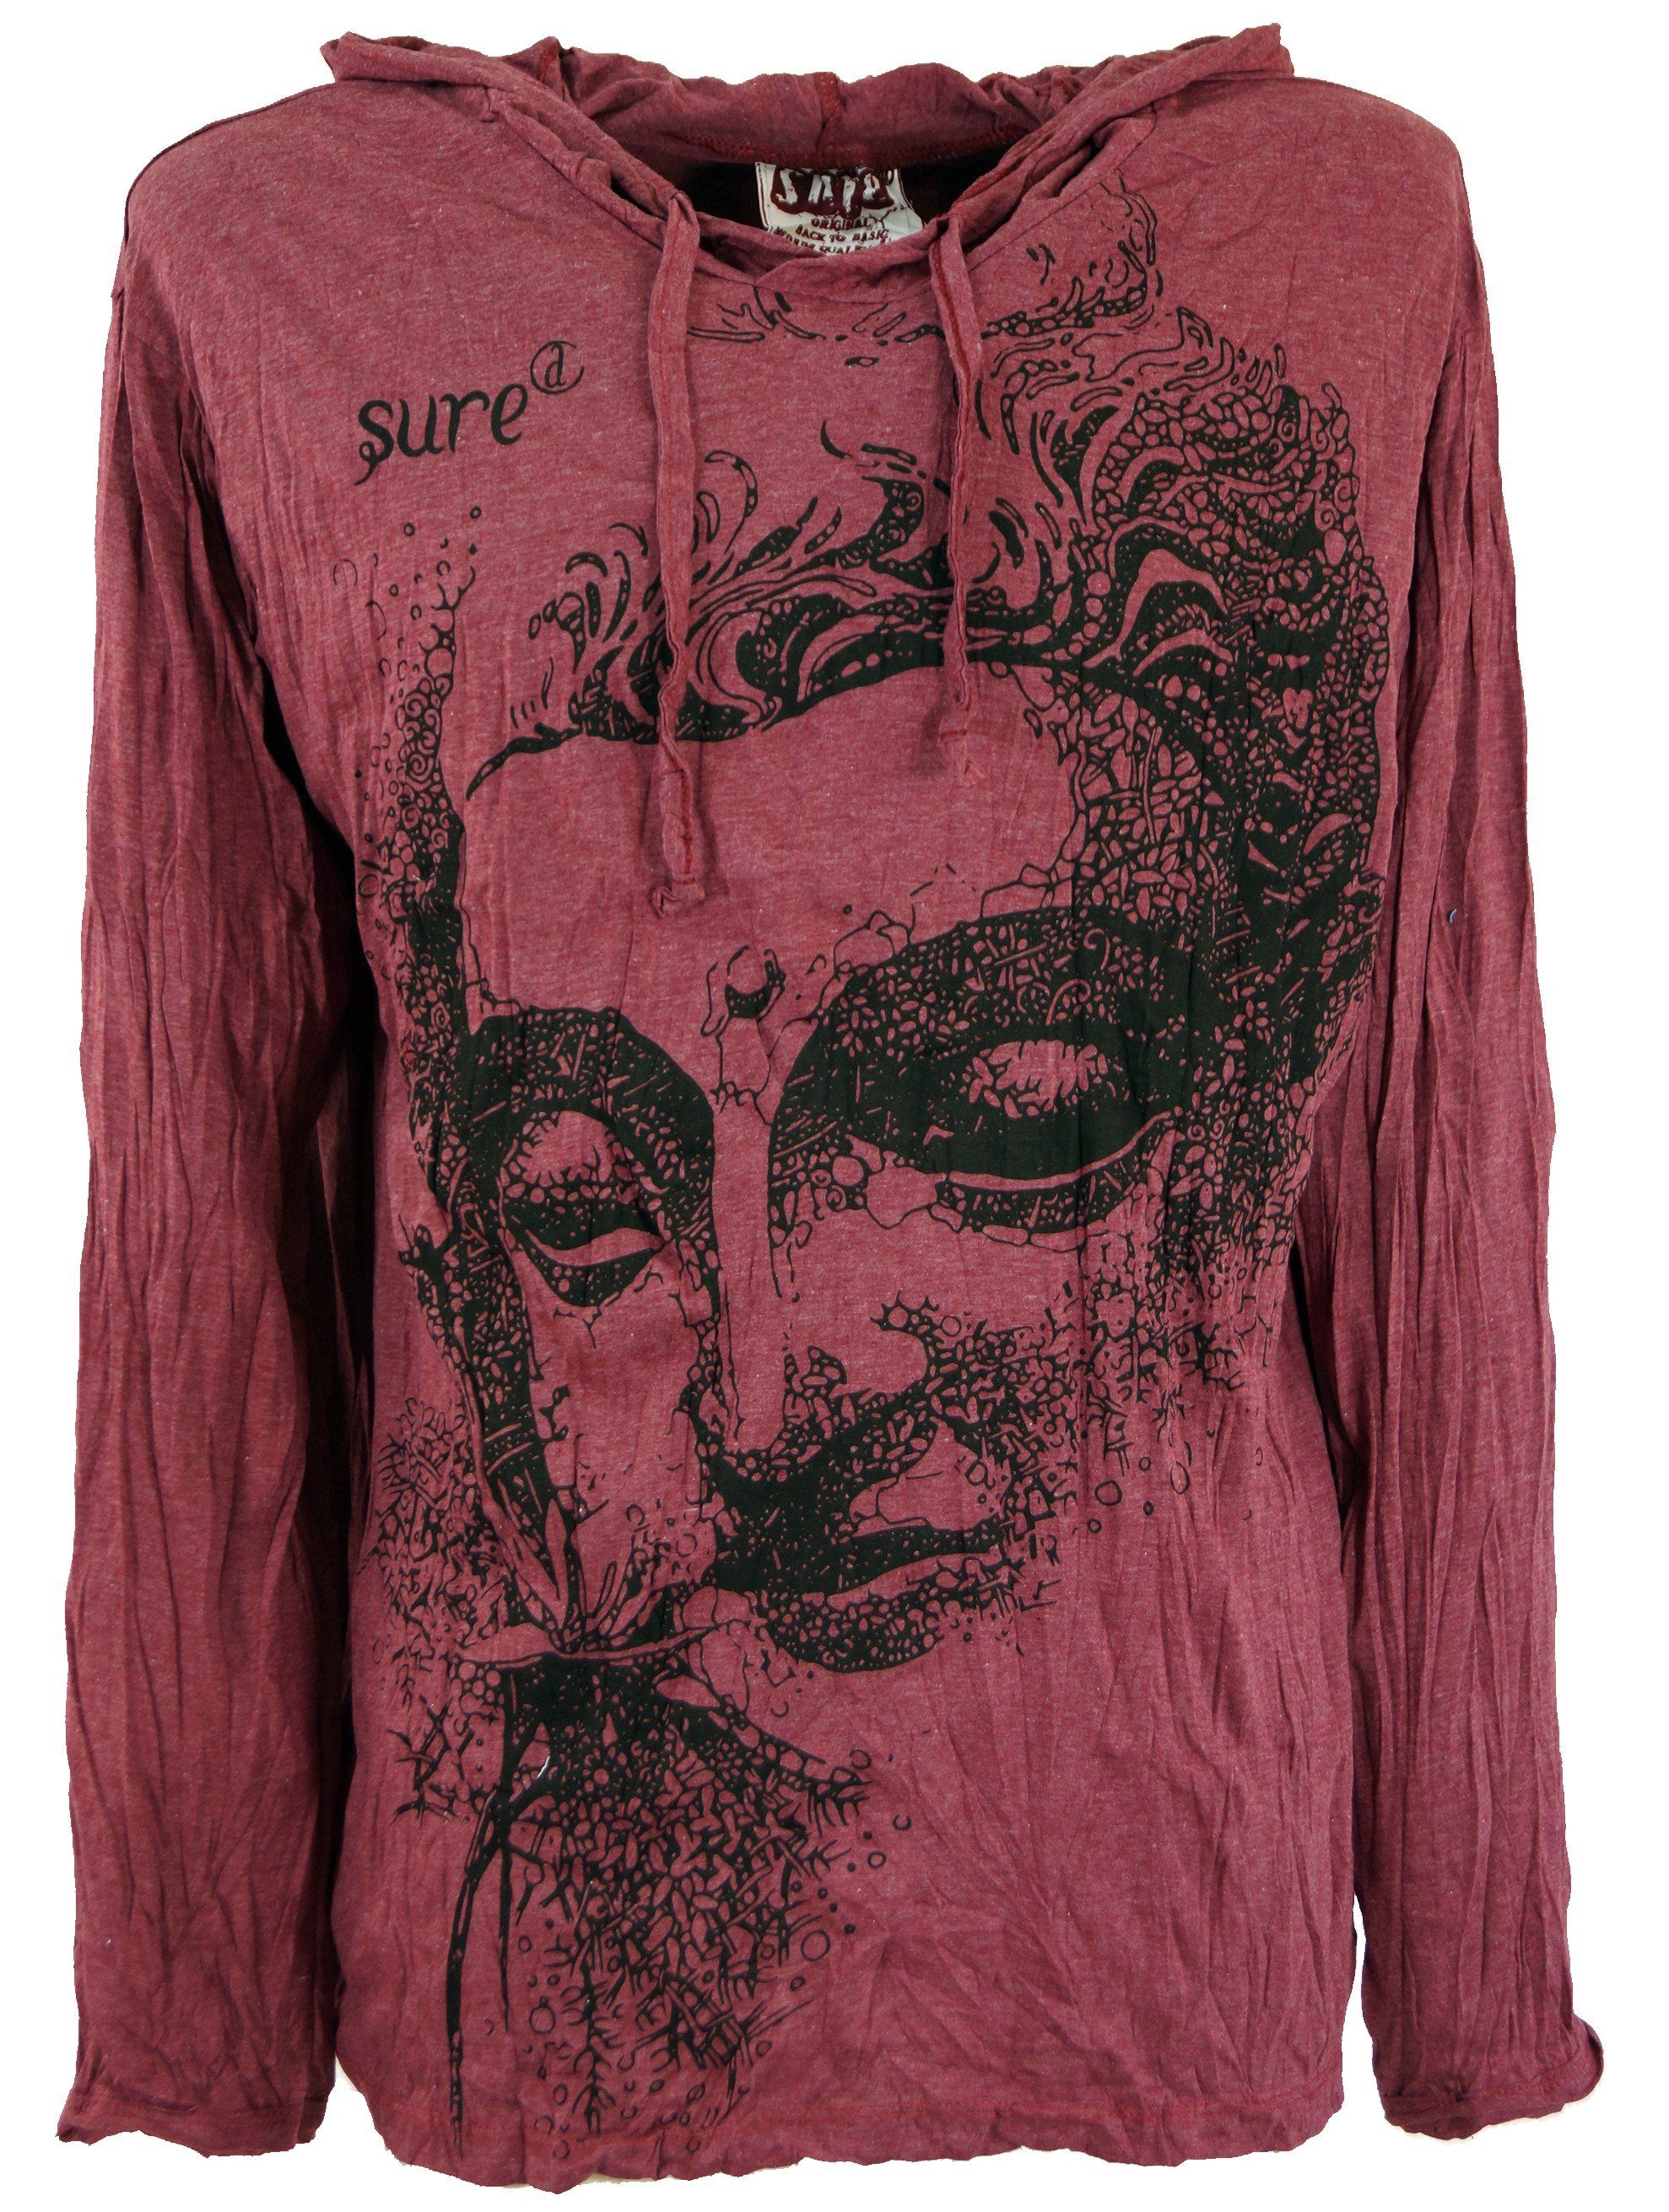 Guru-Shop T-Shirt Sure Langarmshirt, Kapuzenshirt Dreaming Buddha.. Goa Style, Festival, alternative Bekleidung bordeaux